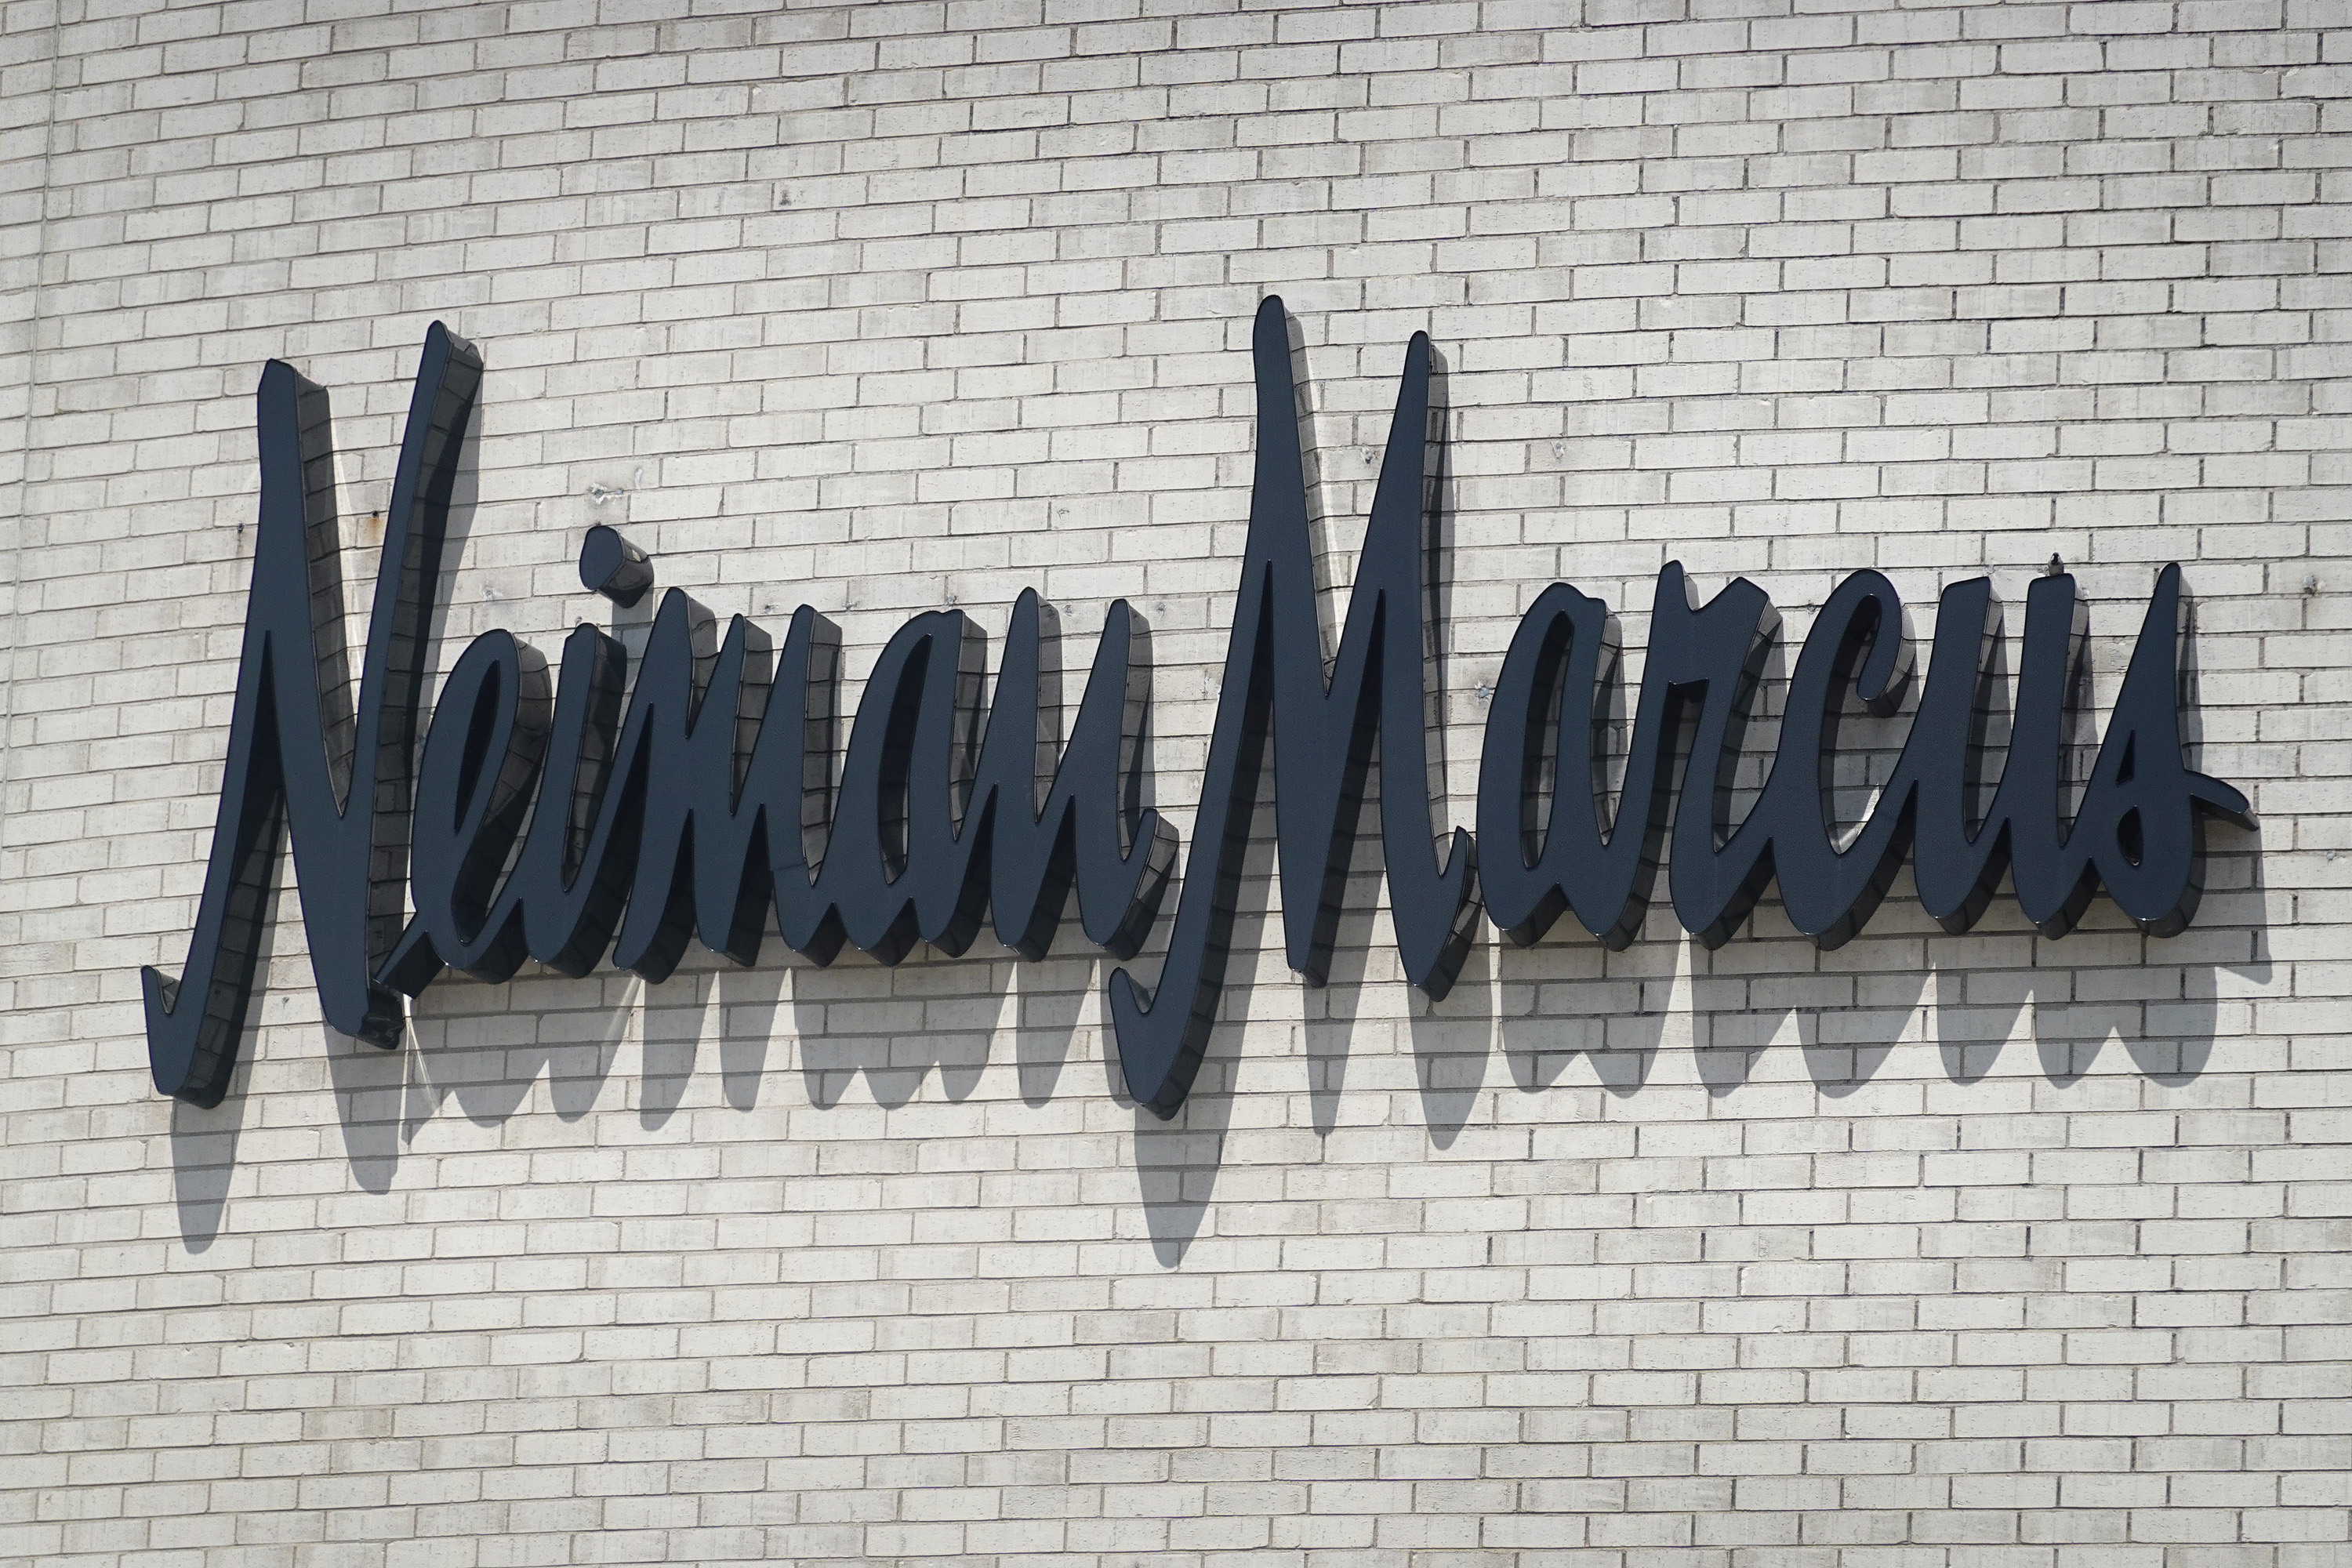 Neiman Marcus to close Mazza Gallerie store - Washington Business Journal